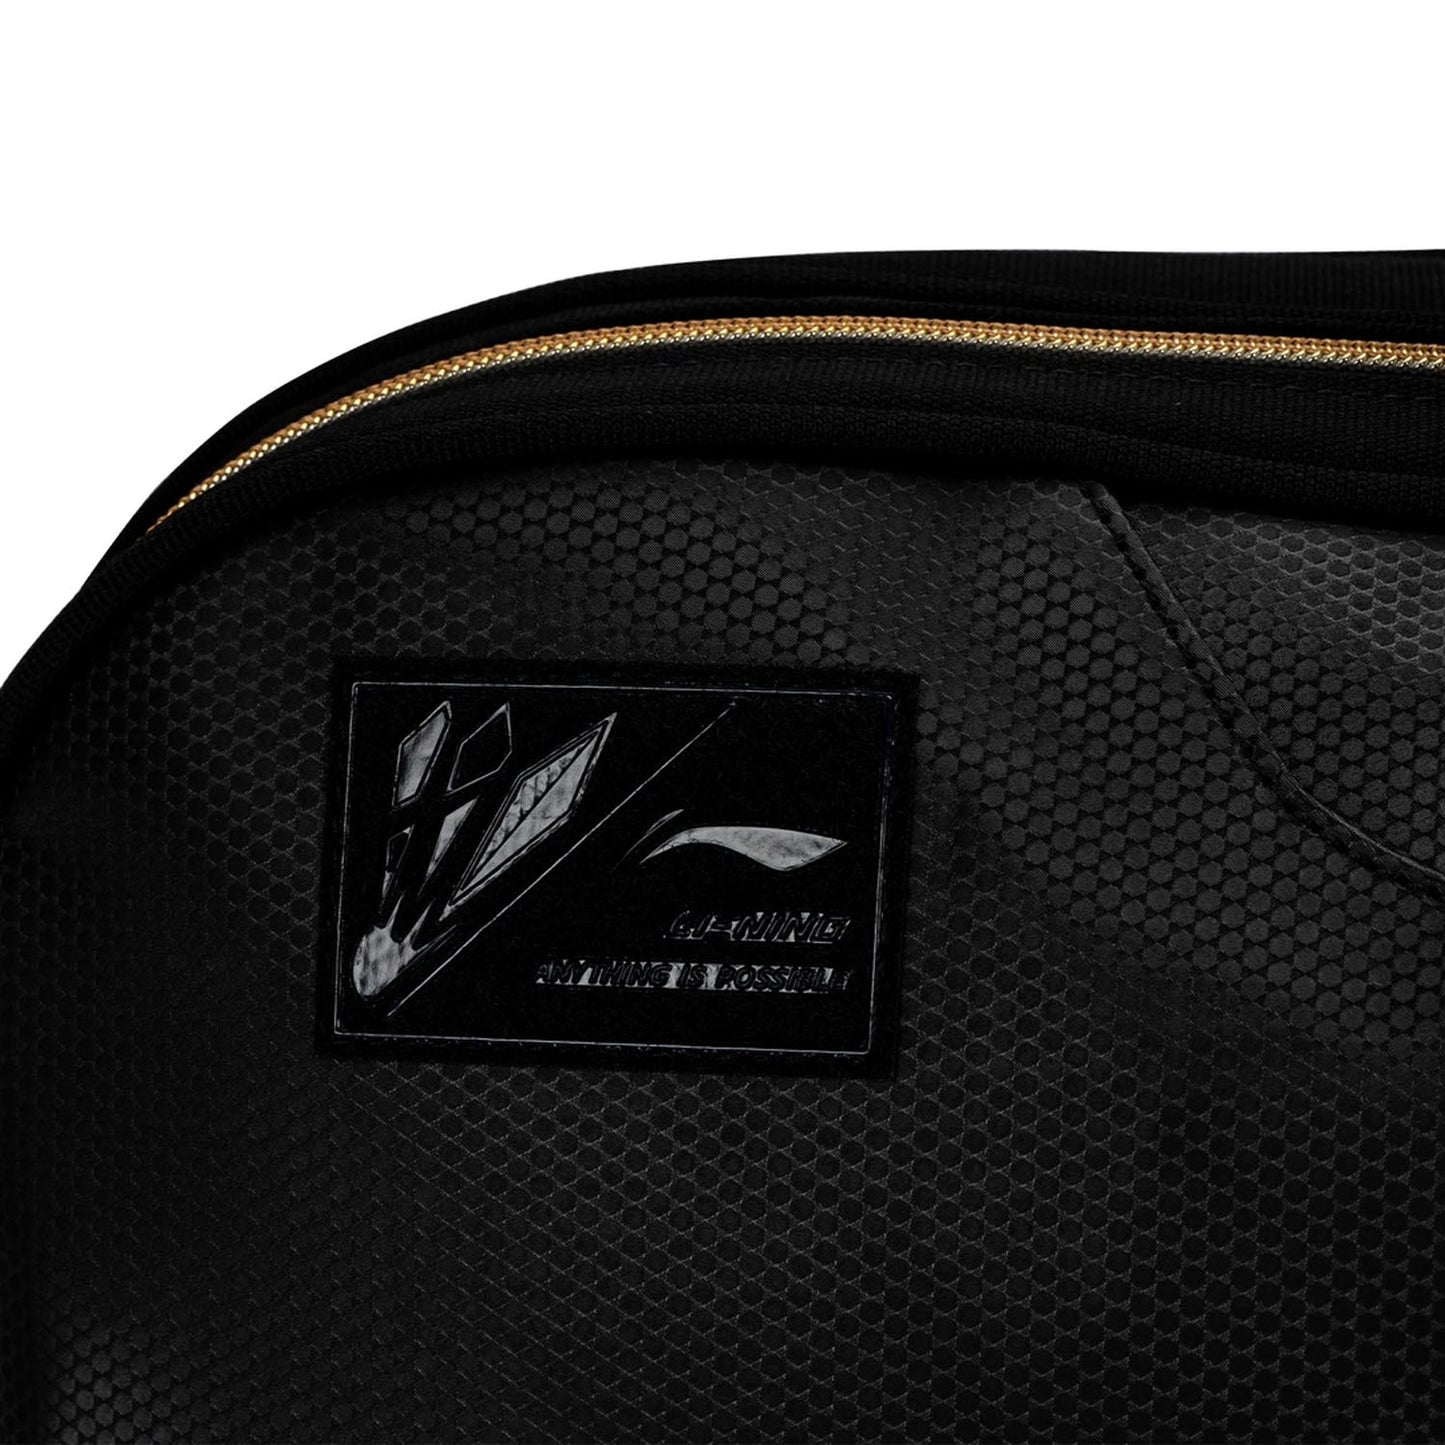 Li-Ning Rectangular Kit Bag - Best Price online Prokicksports.com